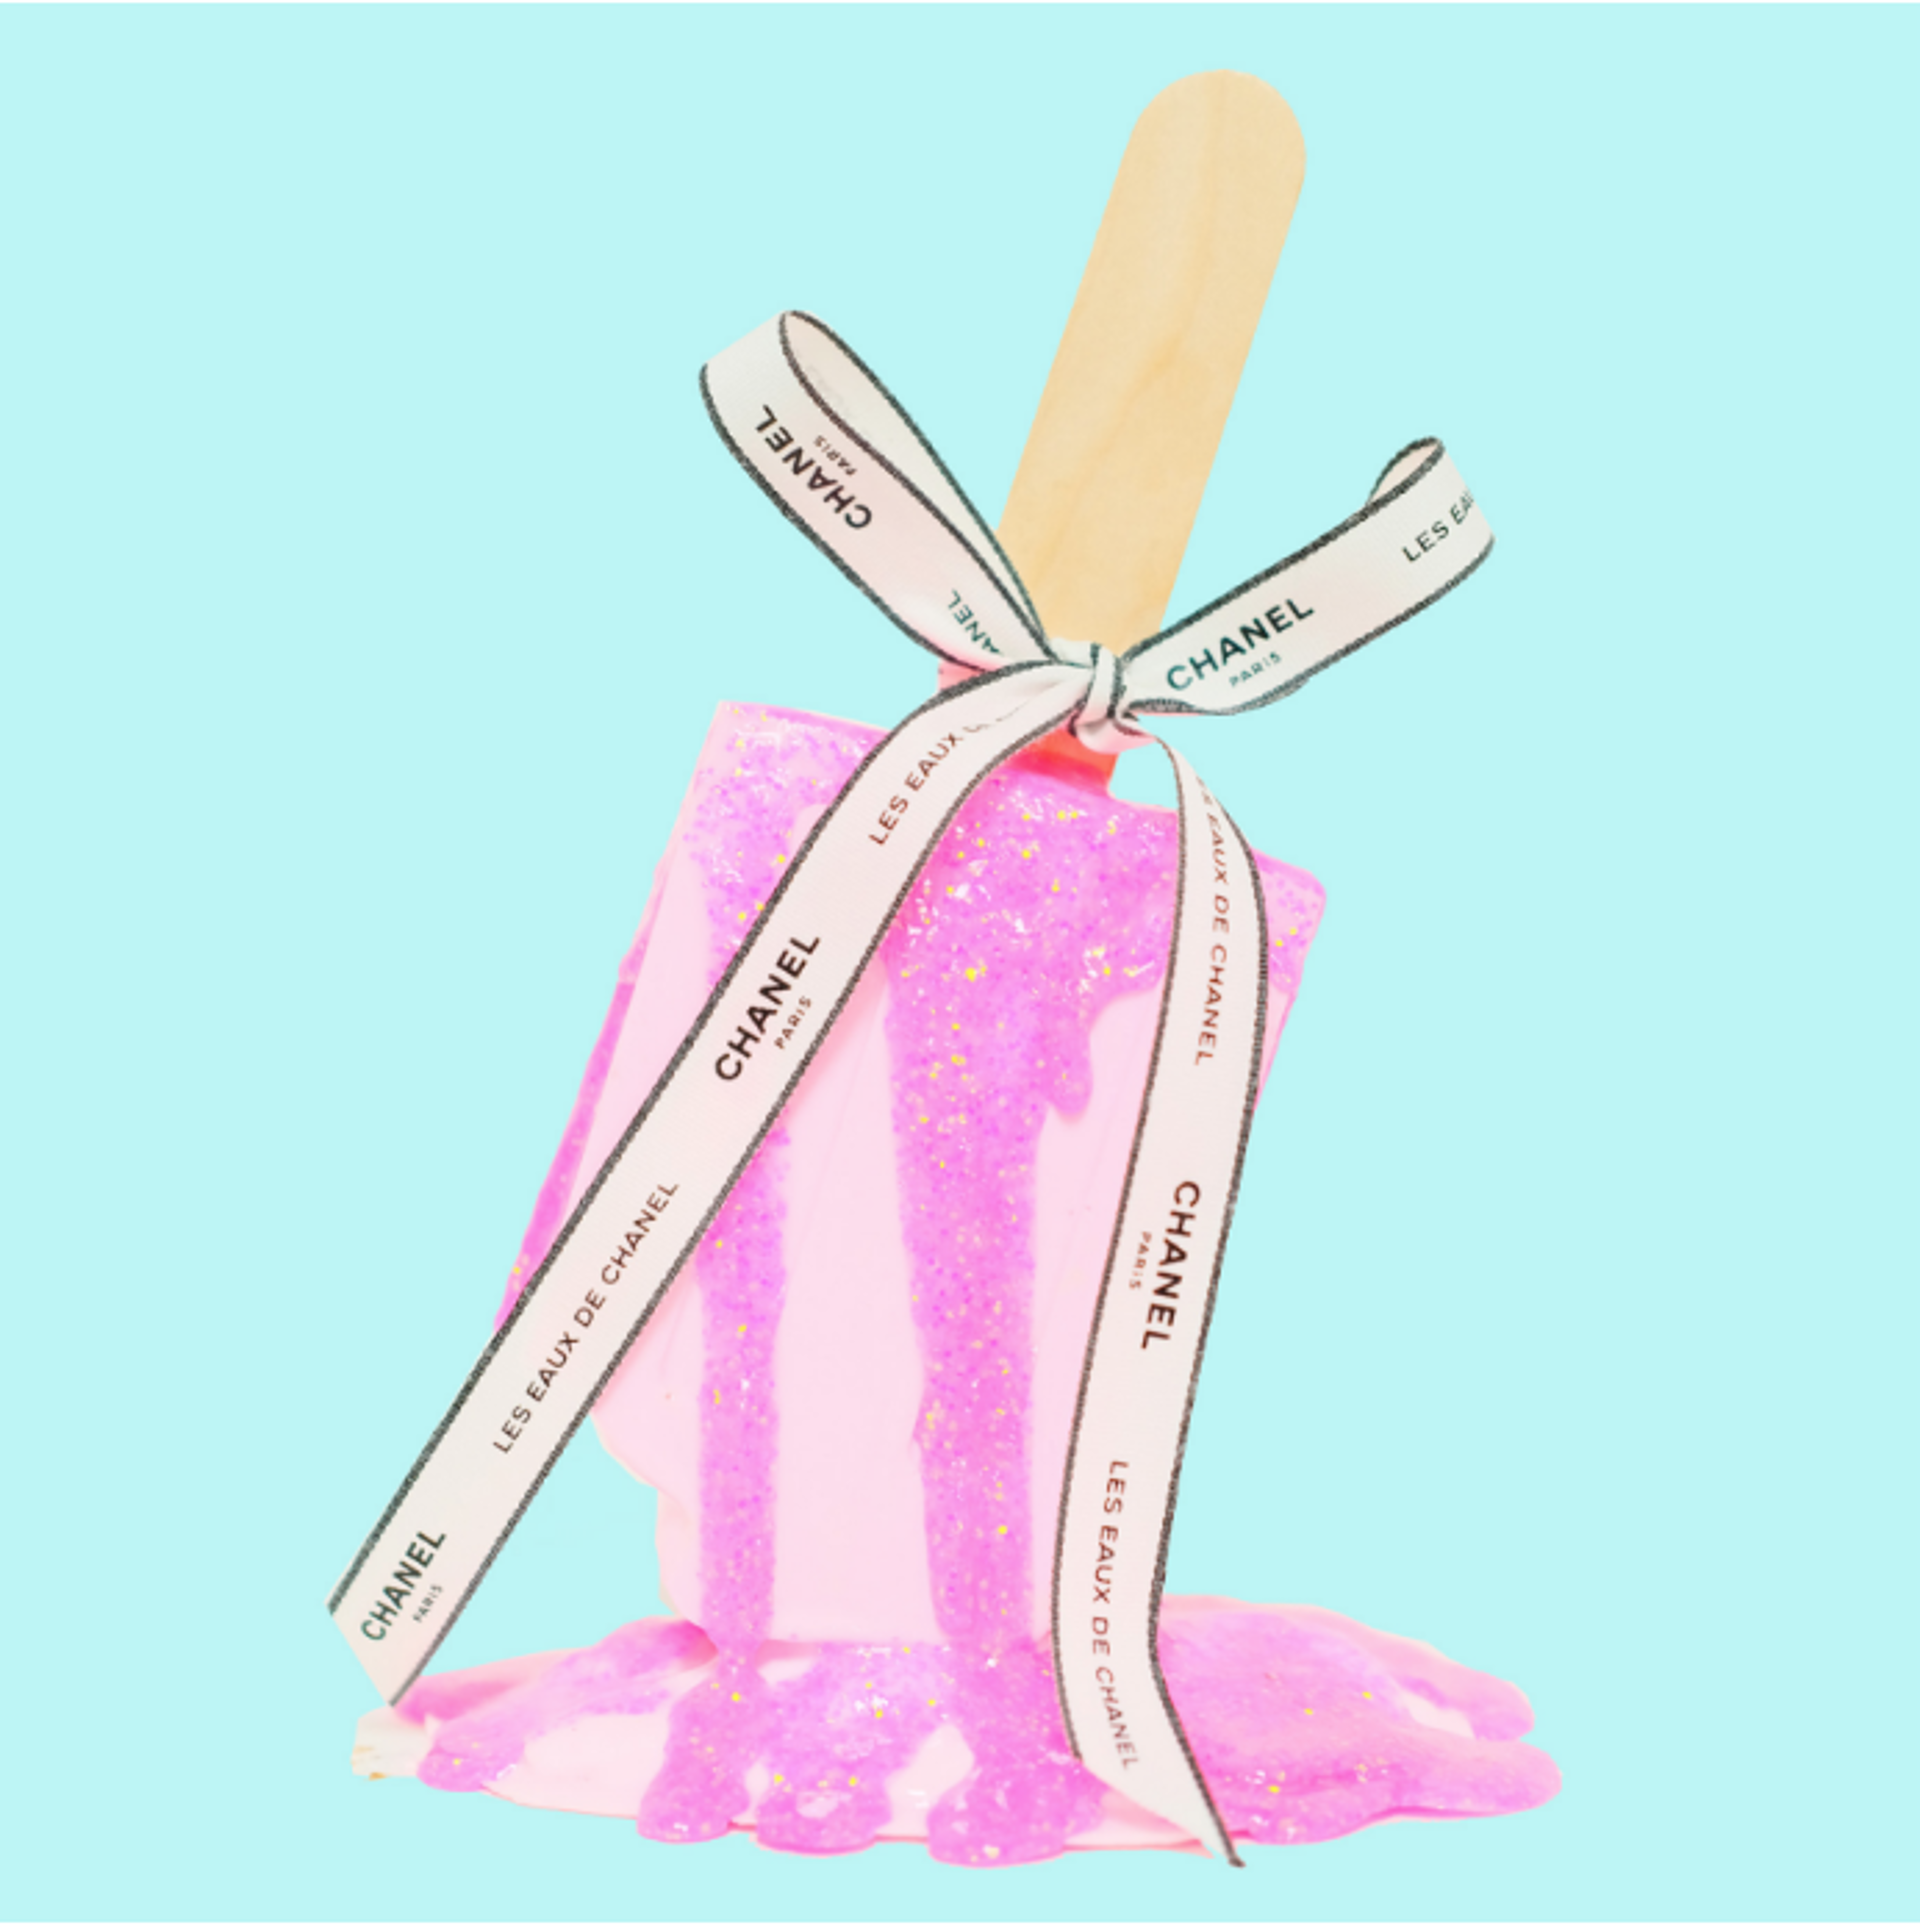 Melting Popsicle Art - Pantone 182c "Pink Chanel" by Betsy Enzensberger